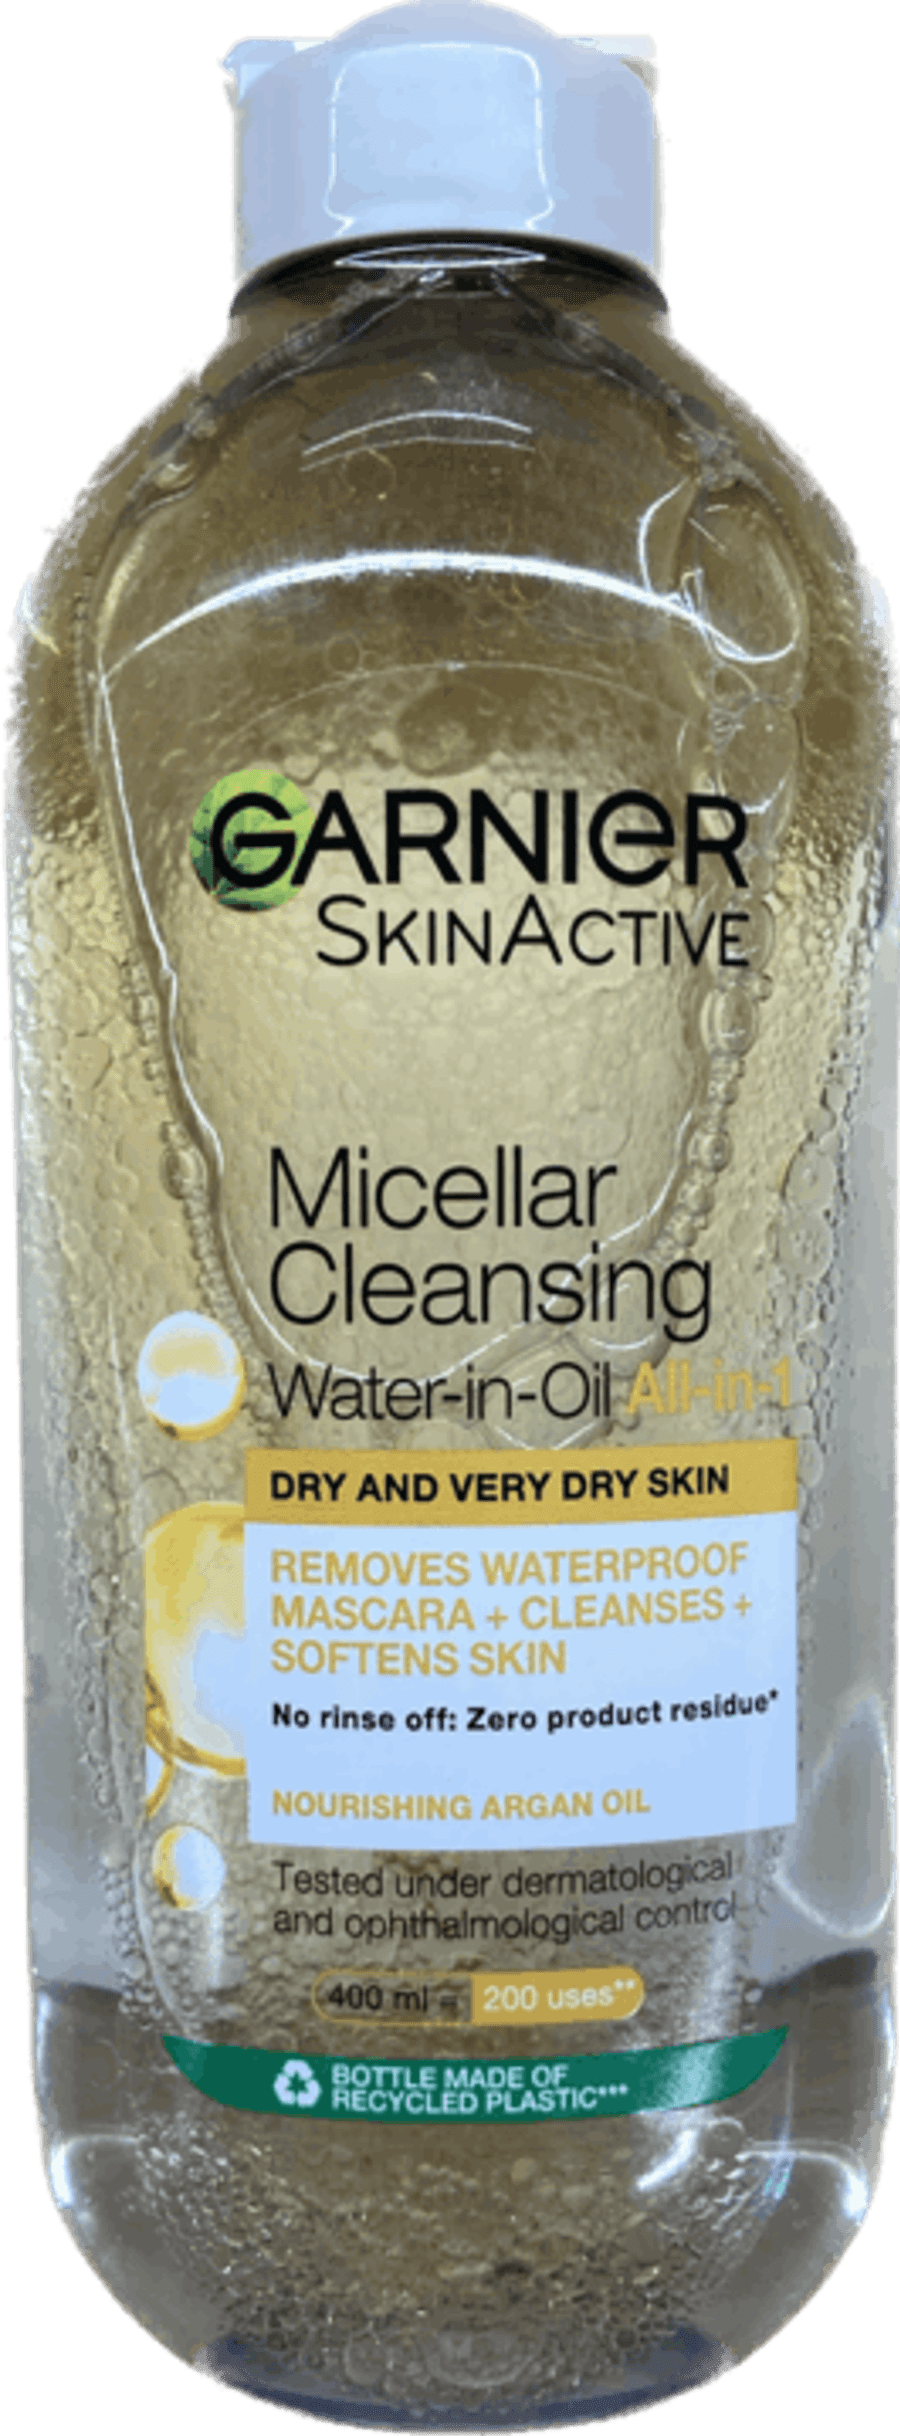 Garnier micellar water oil 400 ml